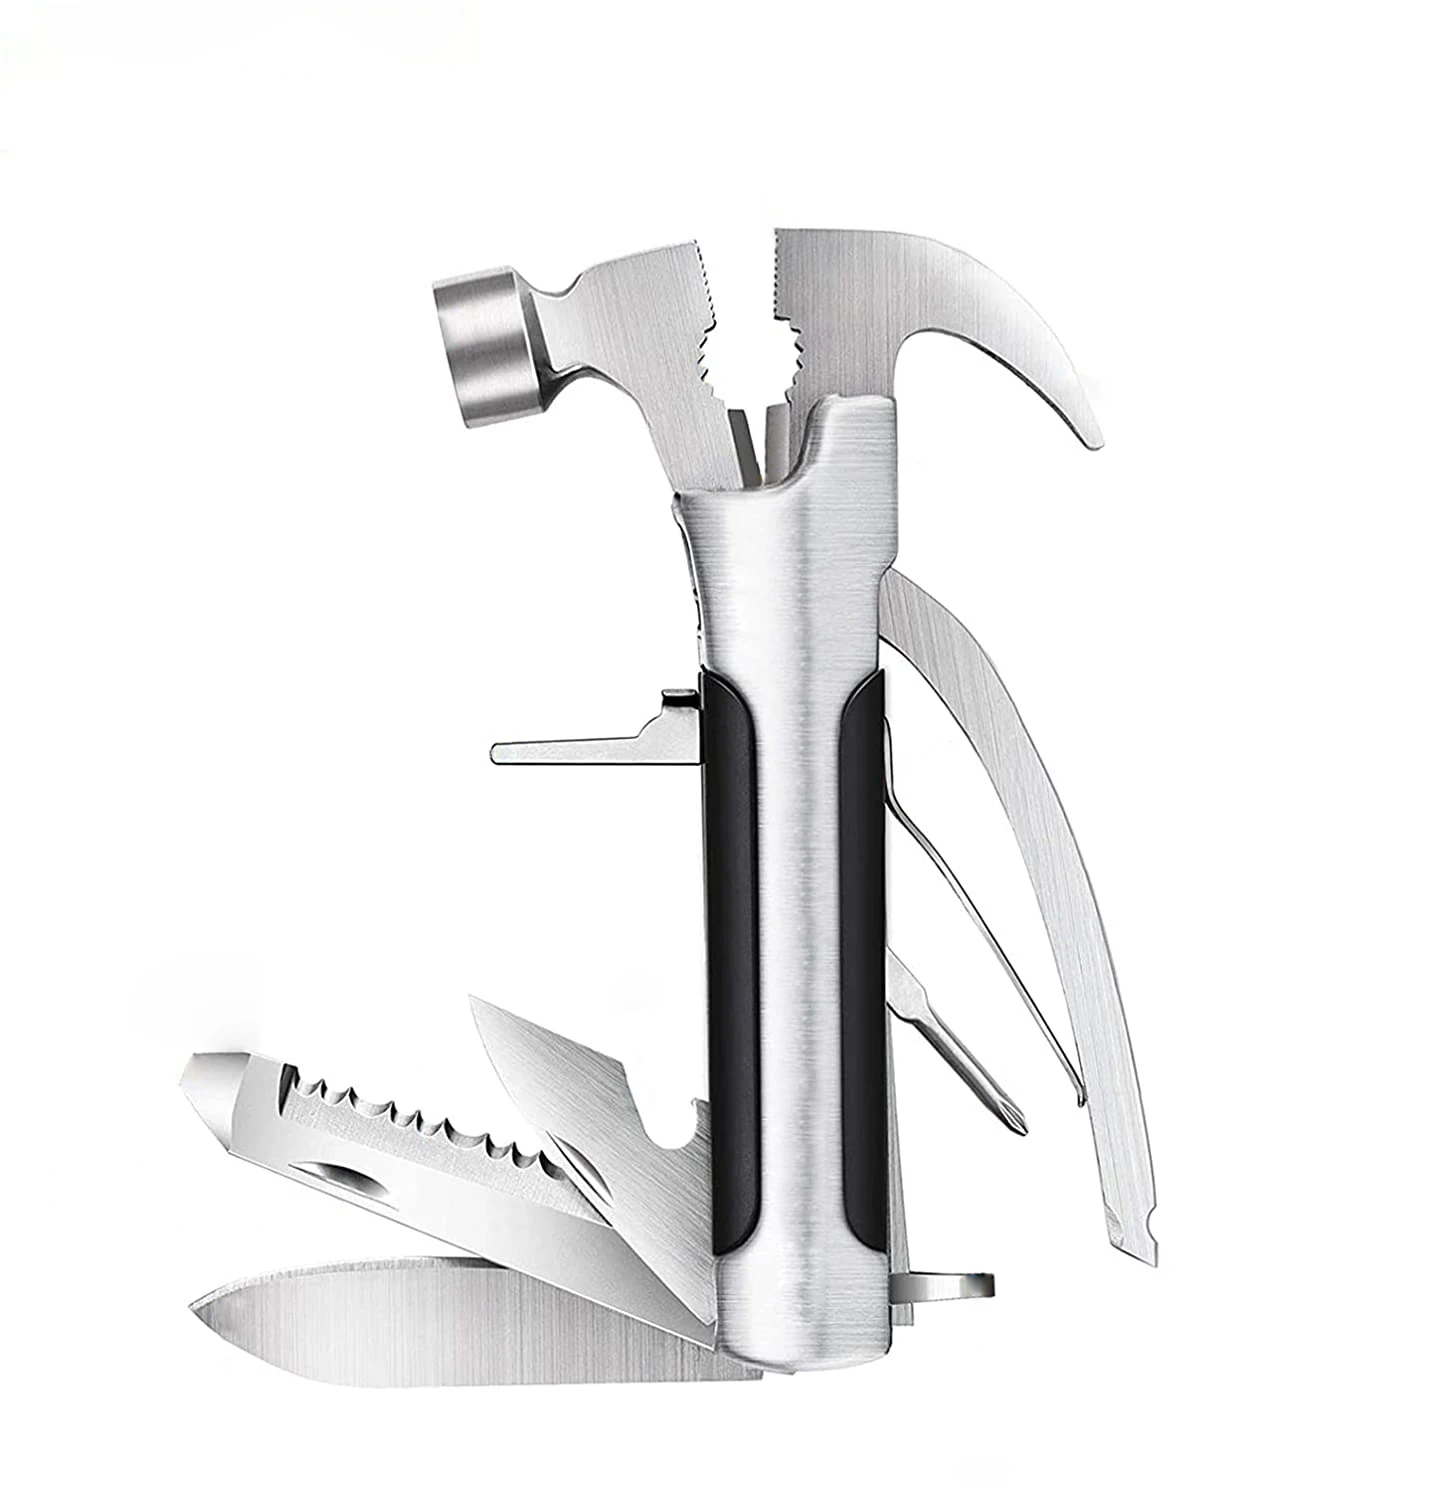 
Stainless steel multi purpose hammer tool portable exquisite multi pocket tool emergency breaker hammer 